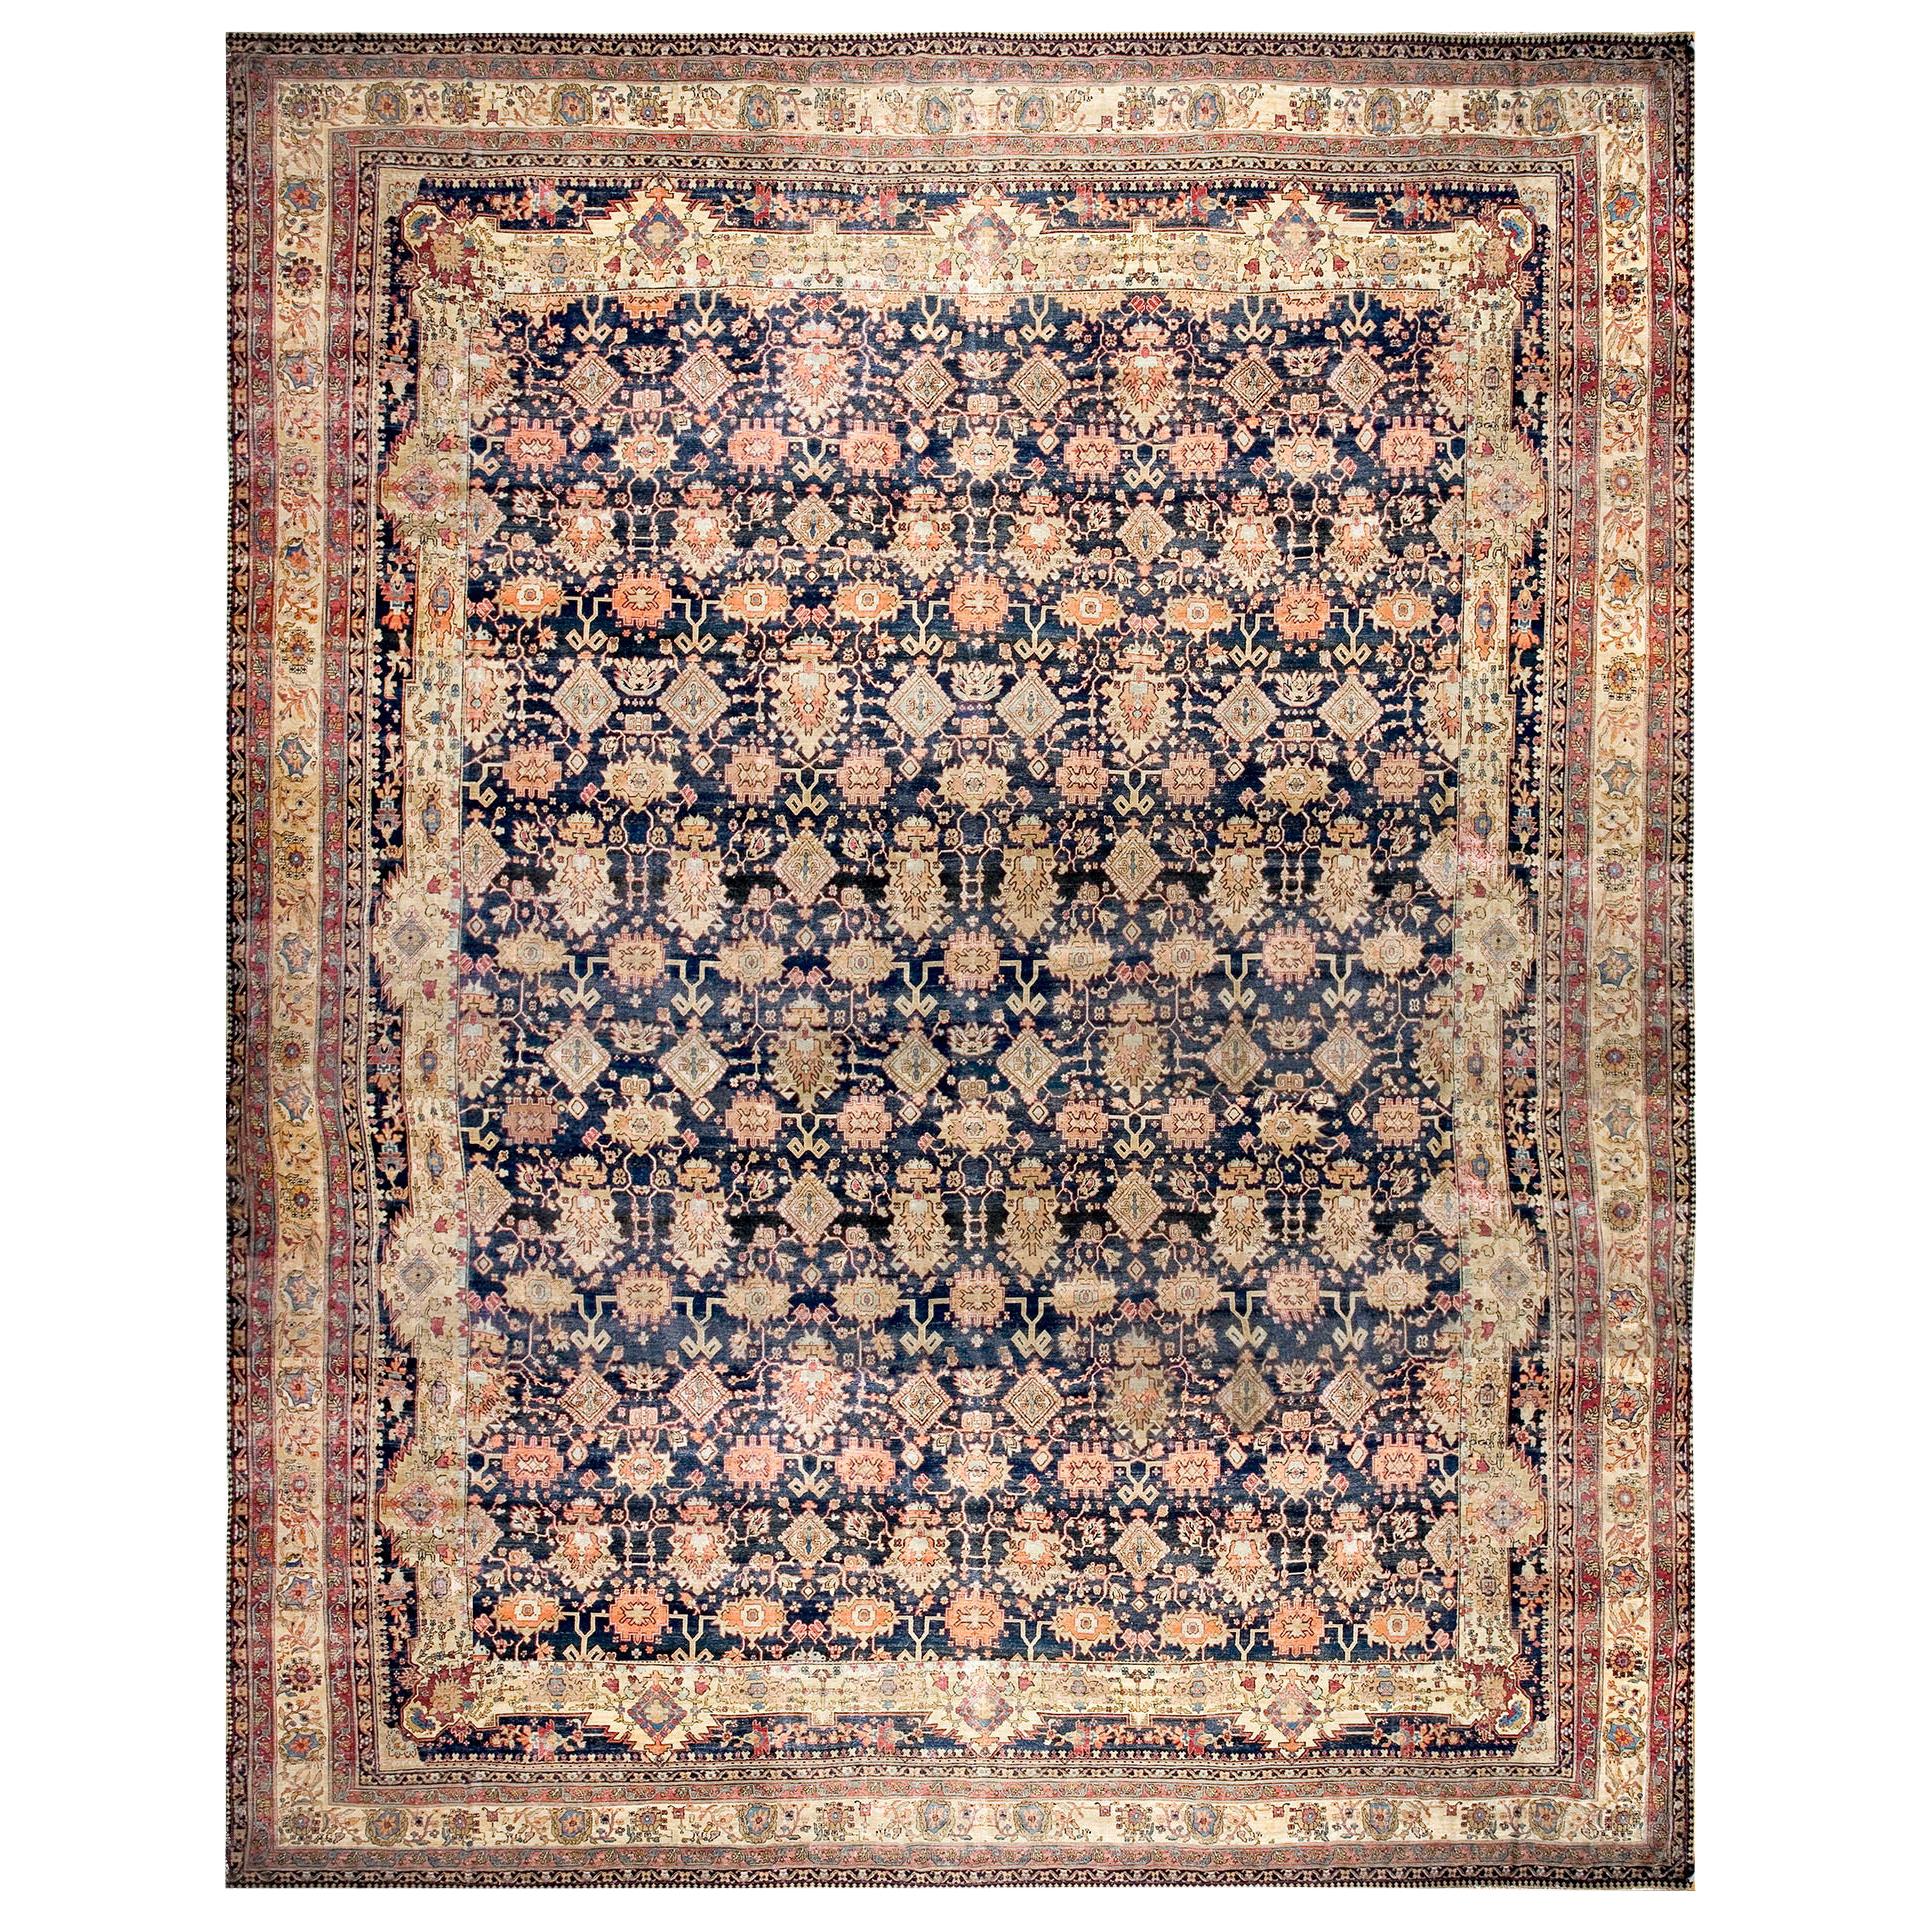 19th Century Persian Kerman Lavar Carpet ( 16'6" x 22'6" - 503 x 685 ) For Sale